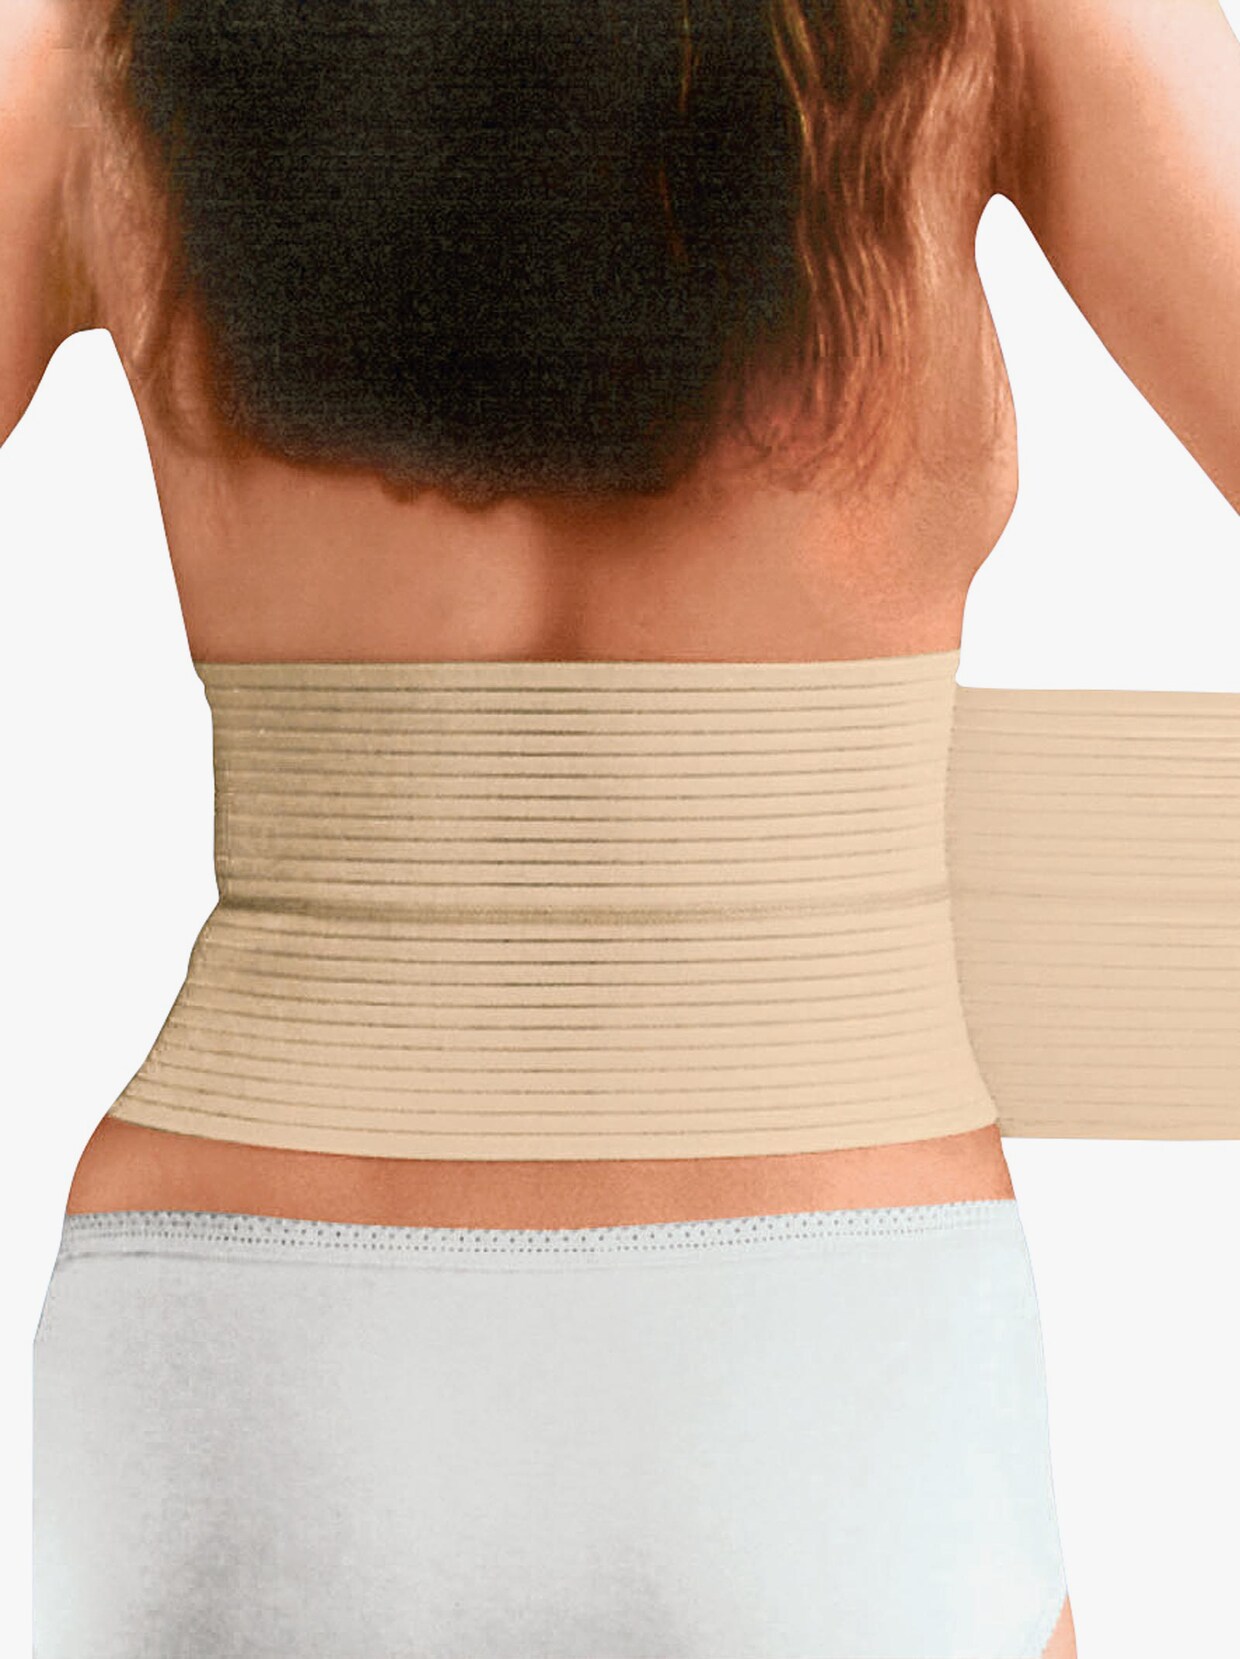 Podporný pás na brucho a chrbát - béžová